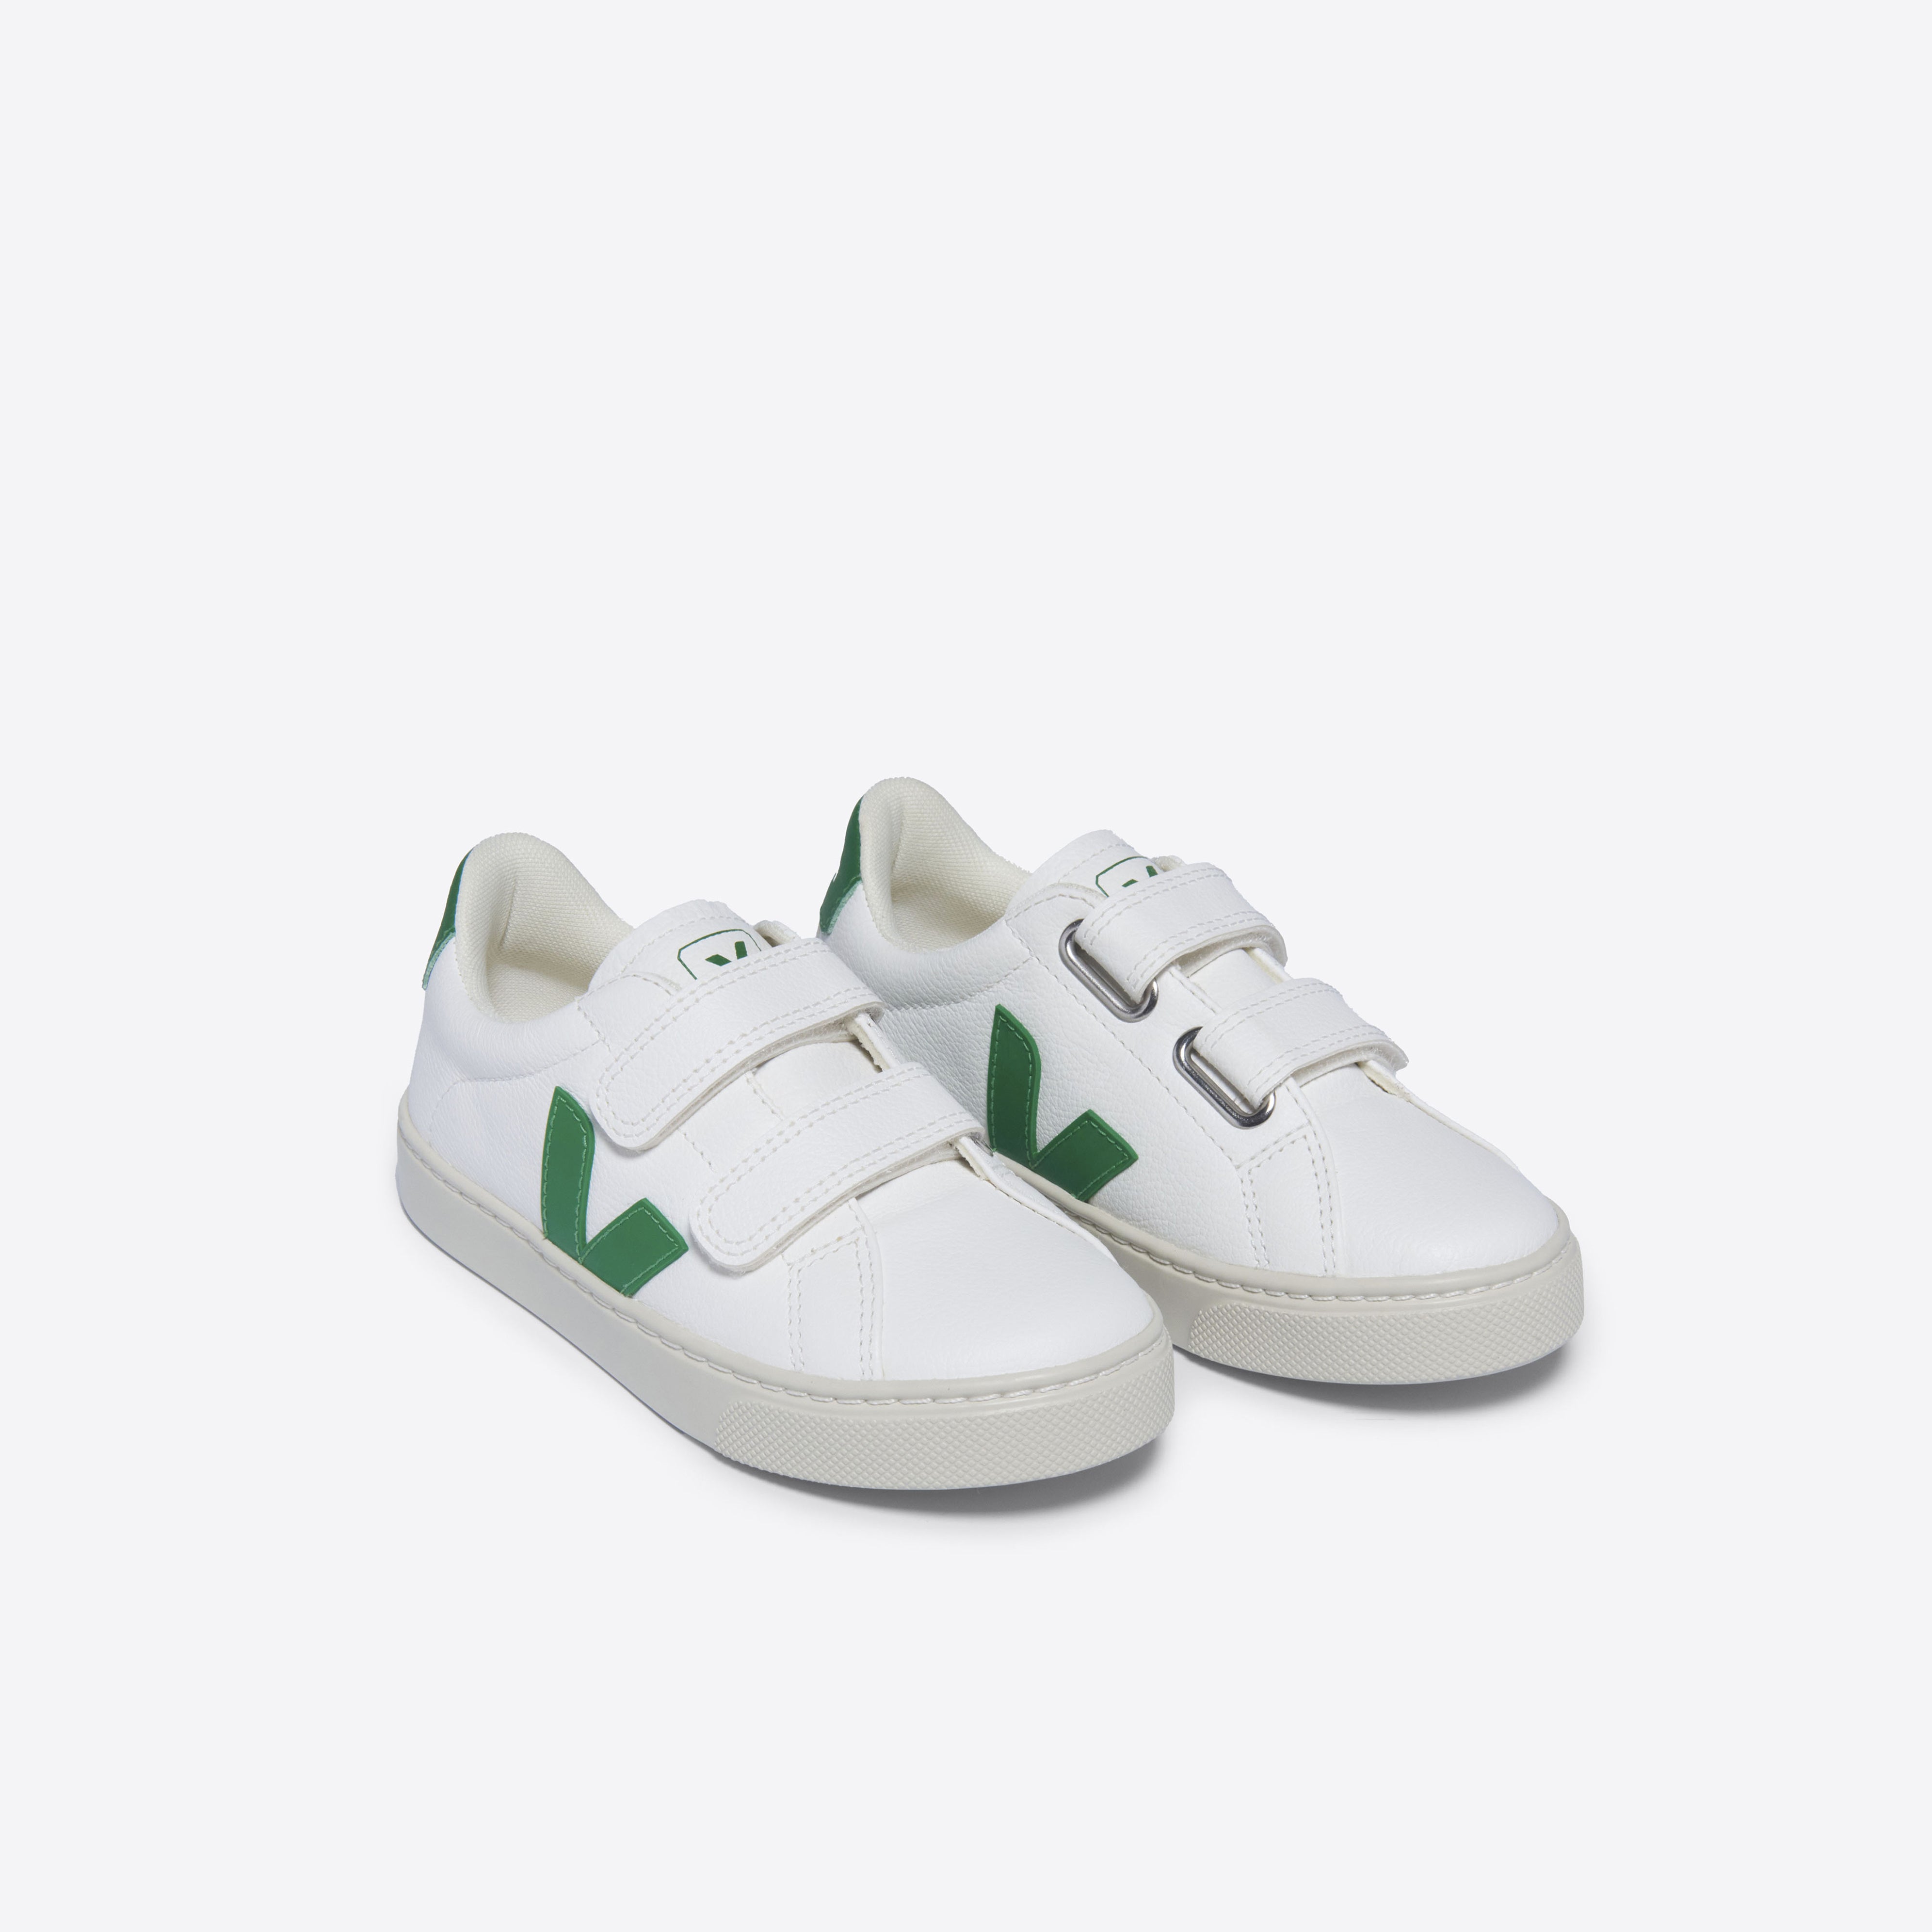 Boys & Girls Green "SMALL ESPLAR" Velcro Shoes